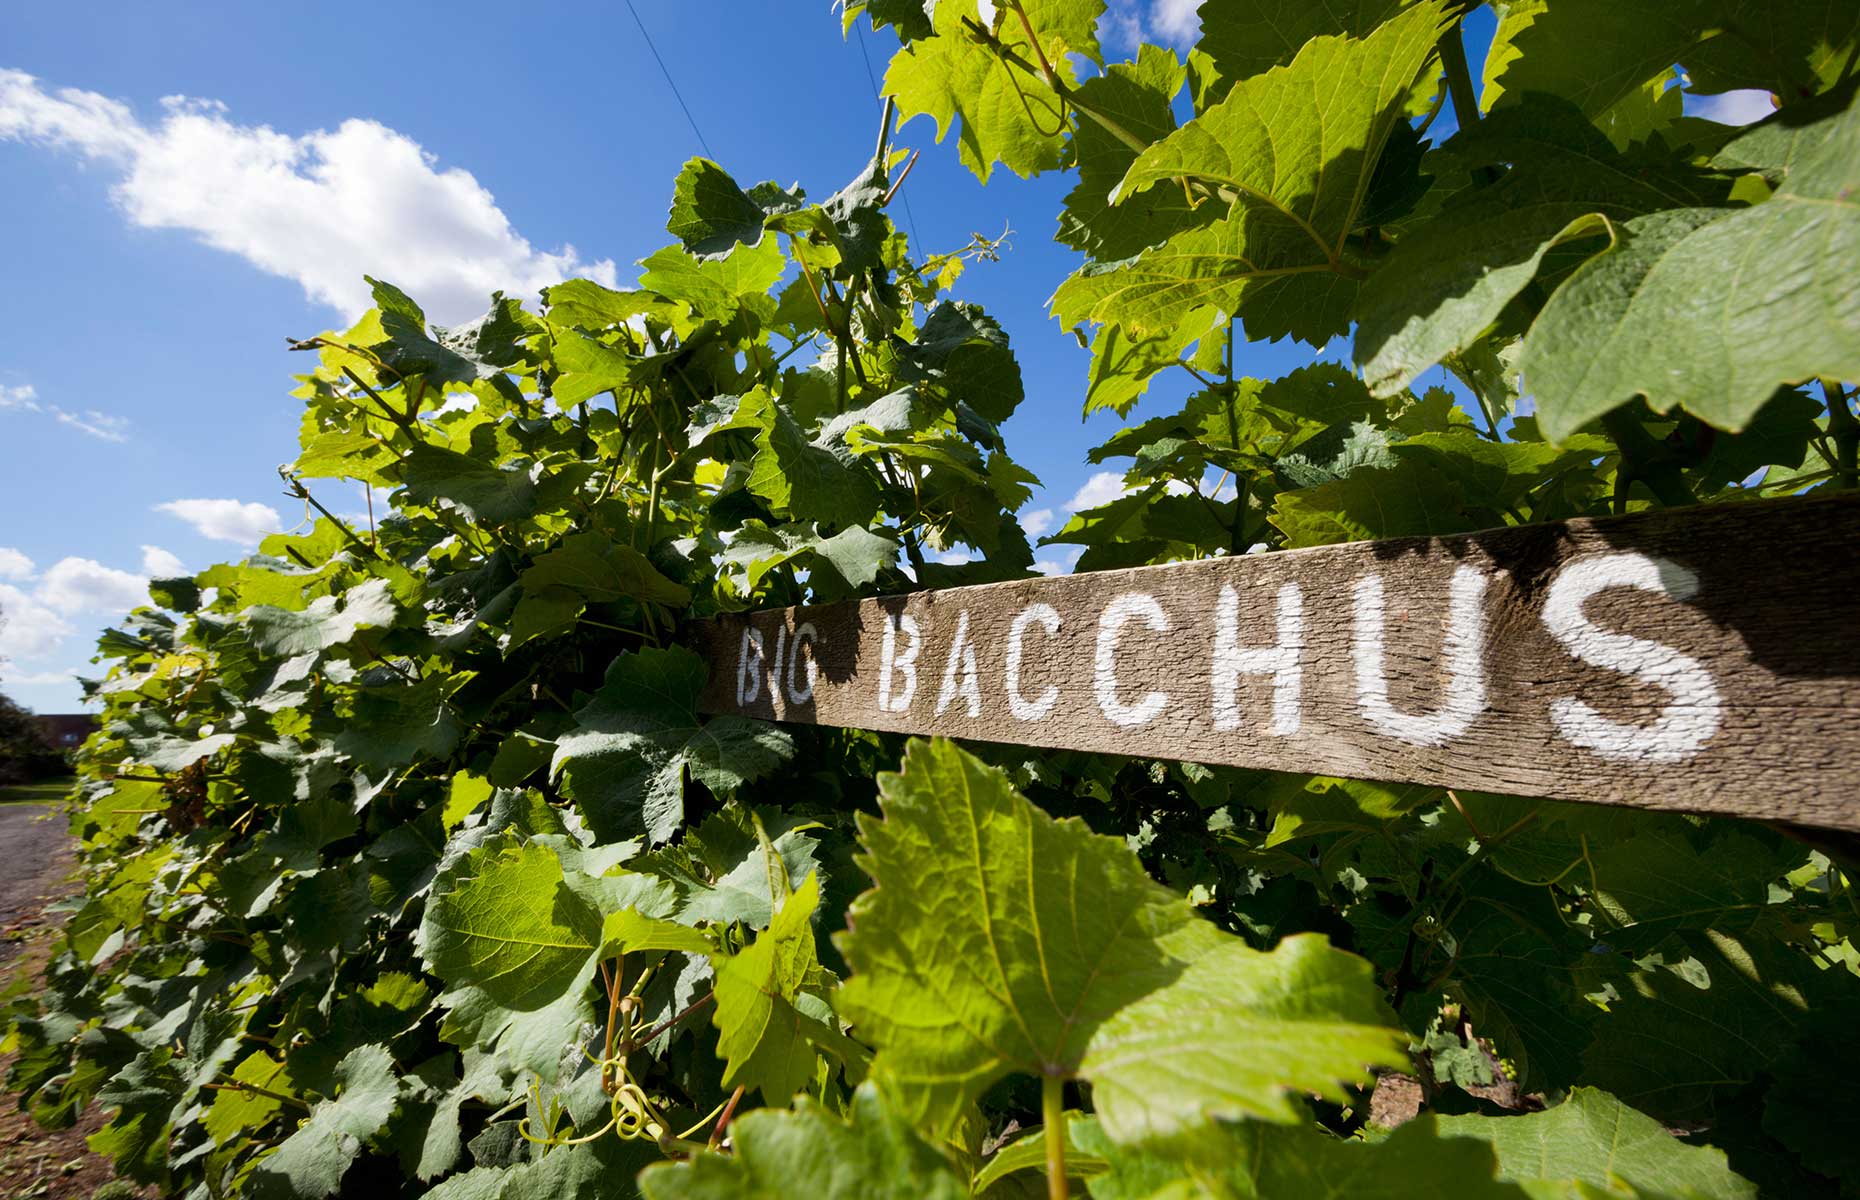 Bacchus vines at Chapel Down vineyard, Kent (Image: Stuart Black/Alamy Stock Photo)